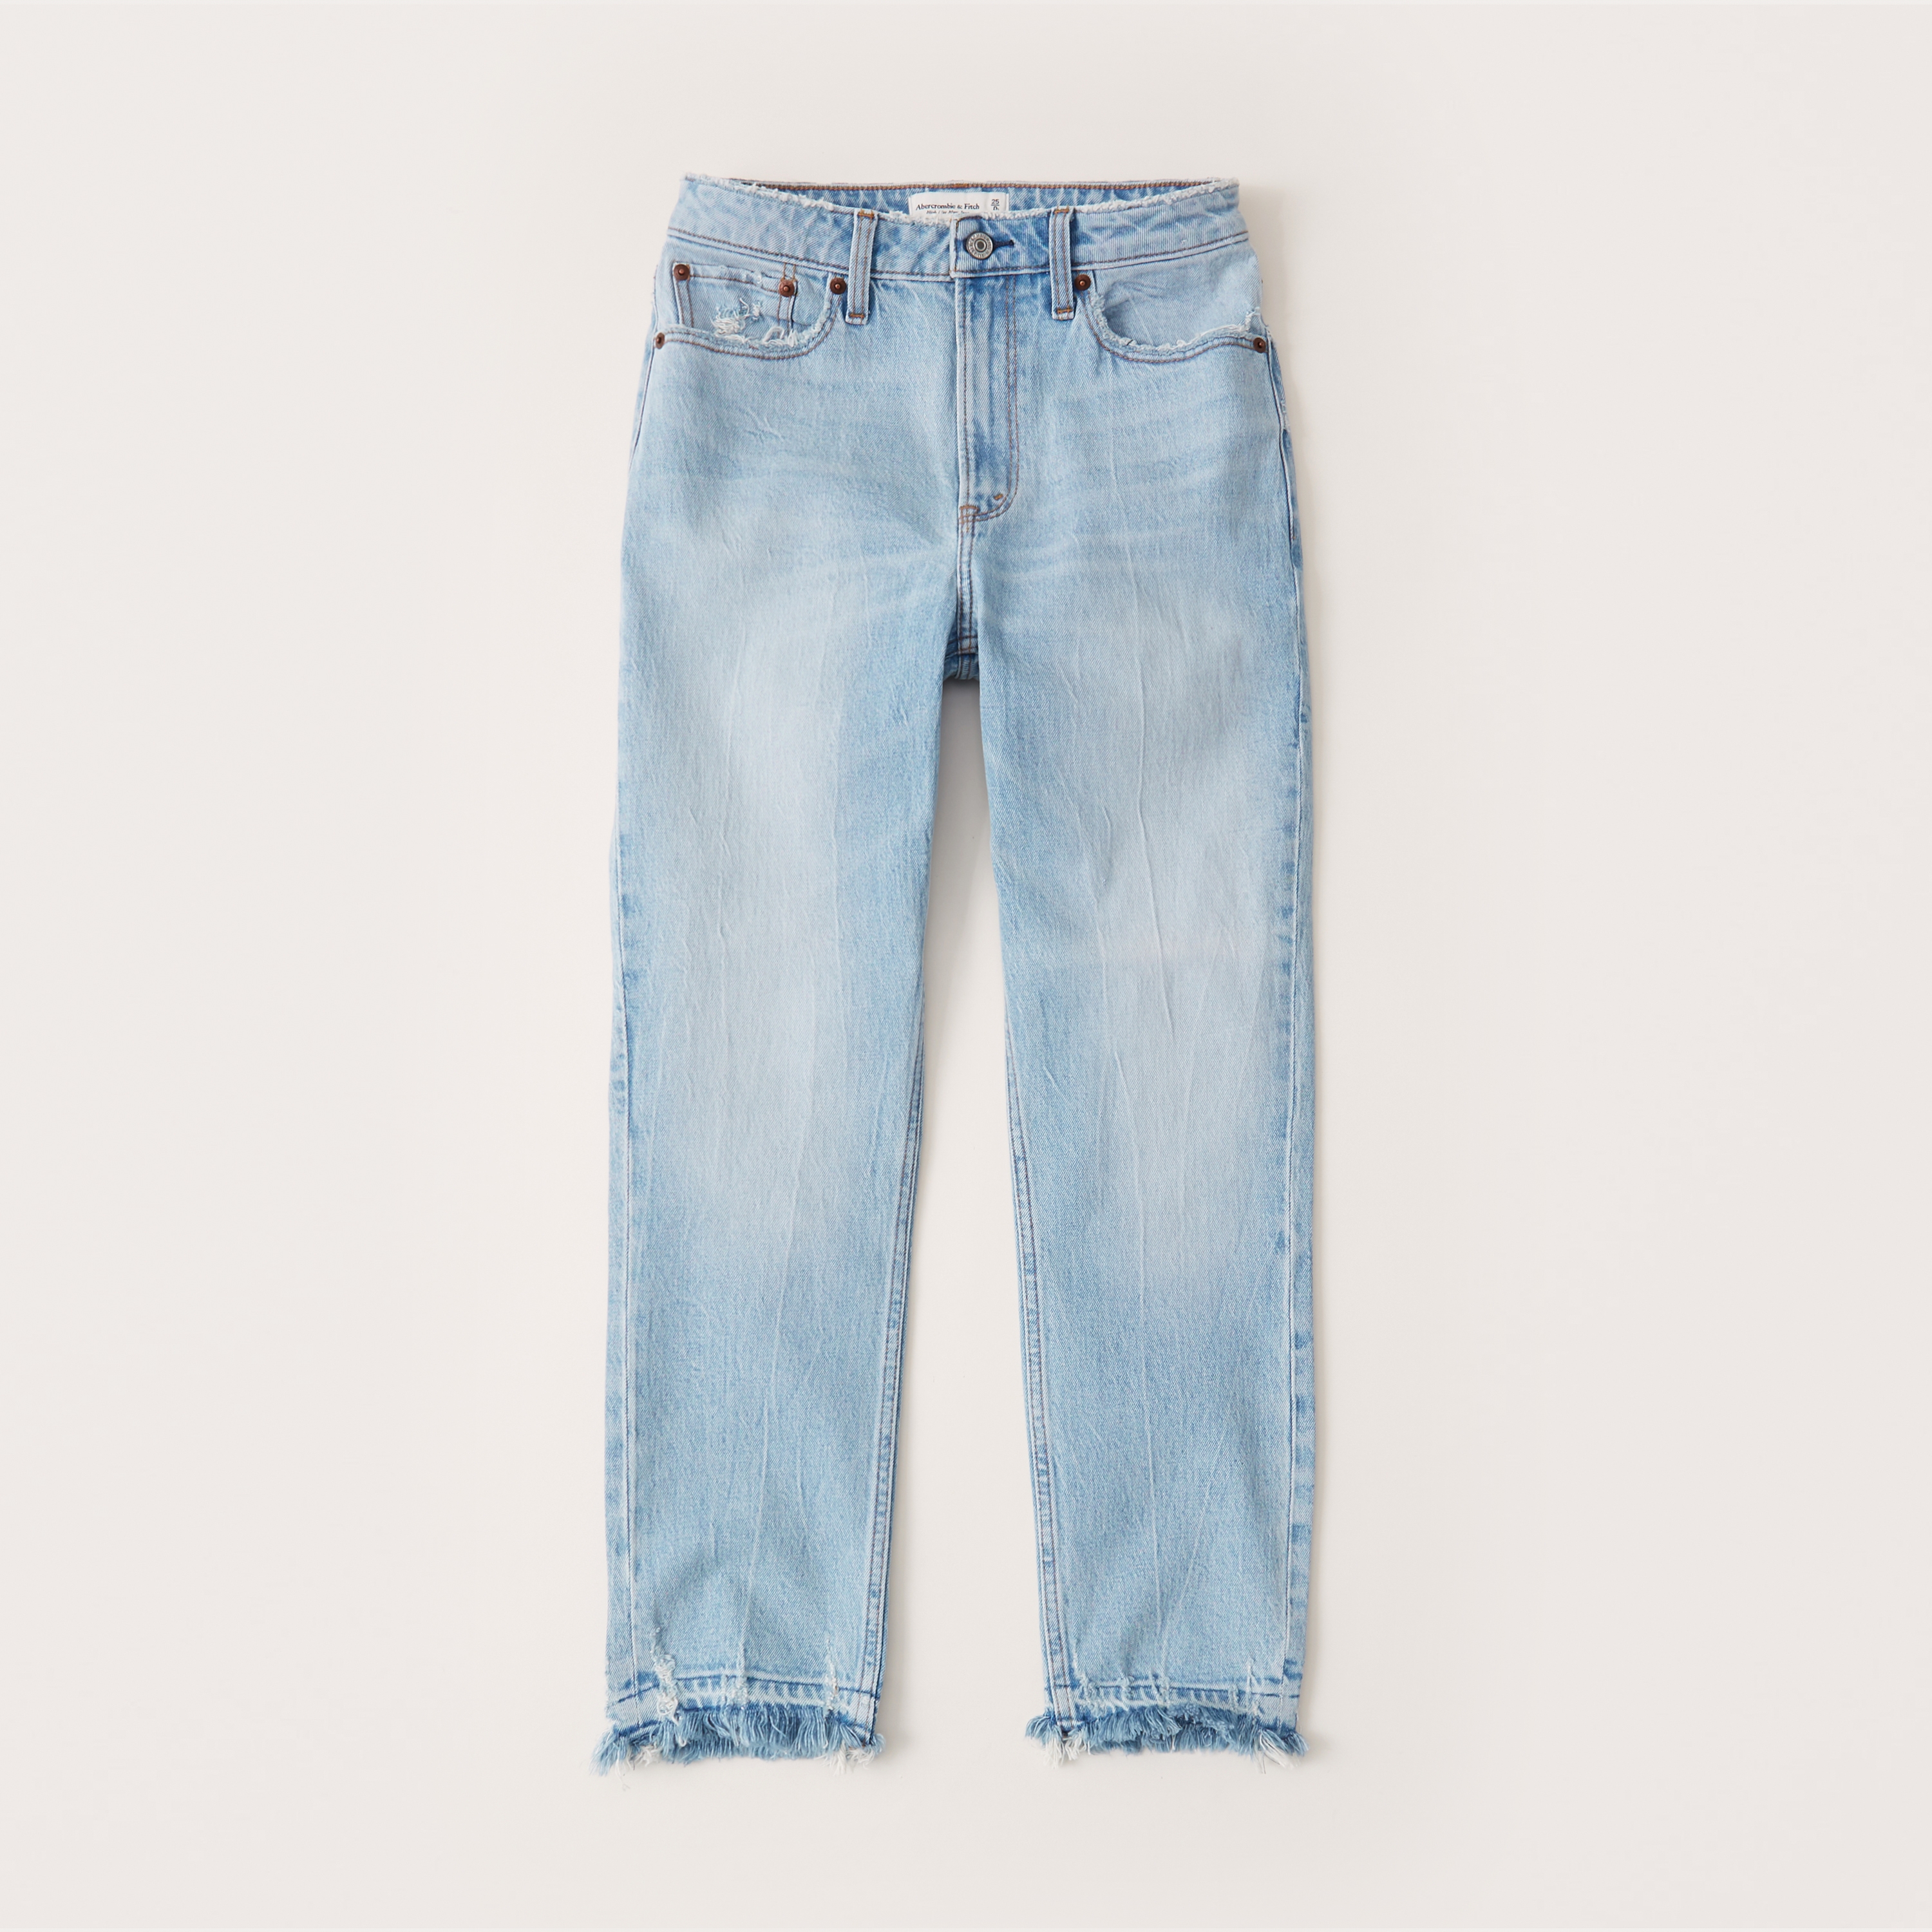 jeans abercrombie